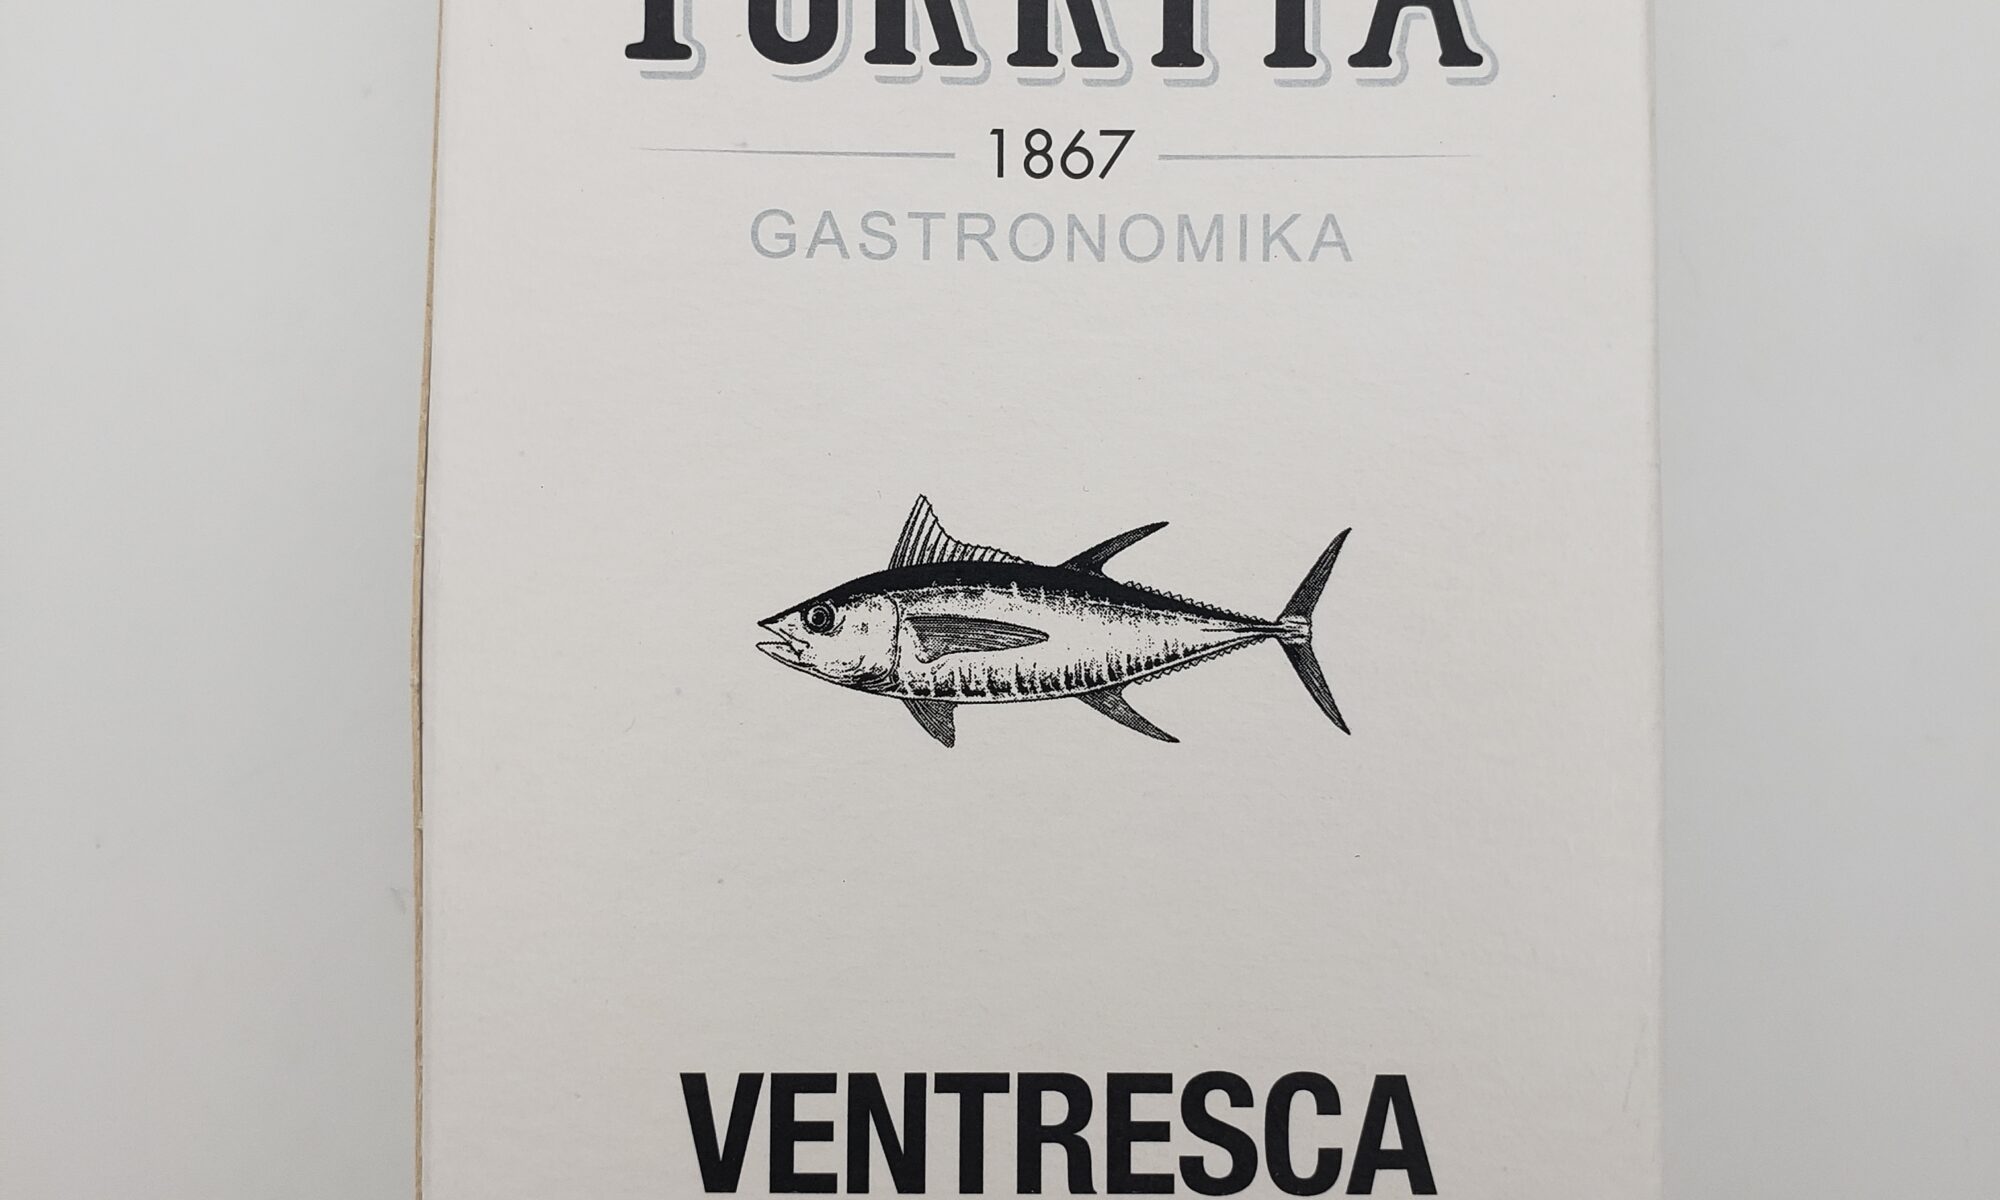 Image of Yurrita Yellowfin ventresca